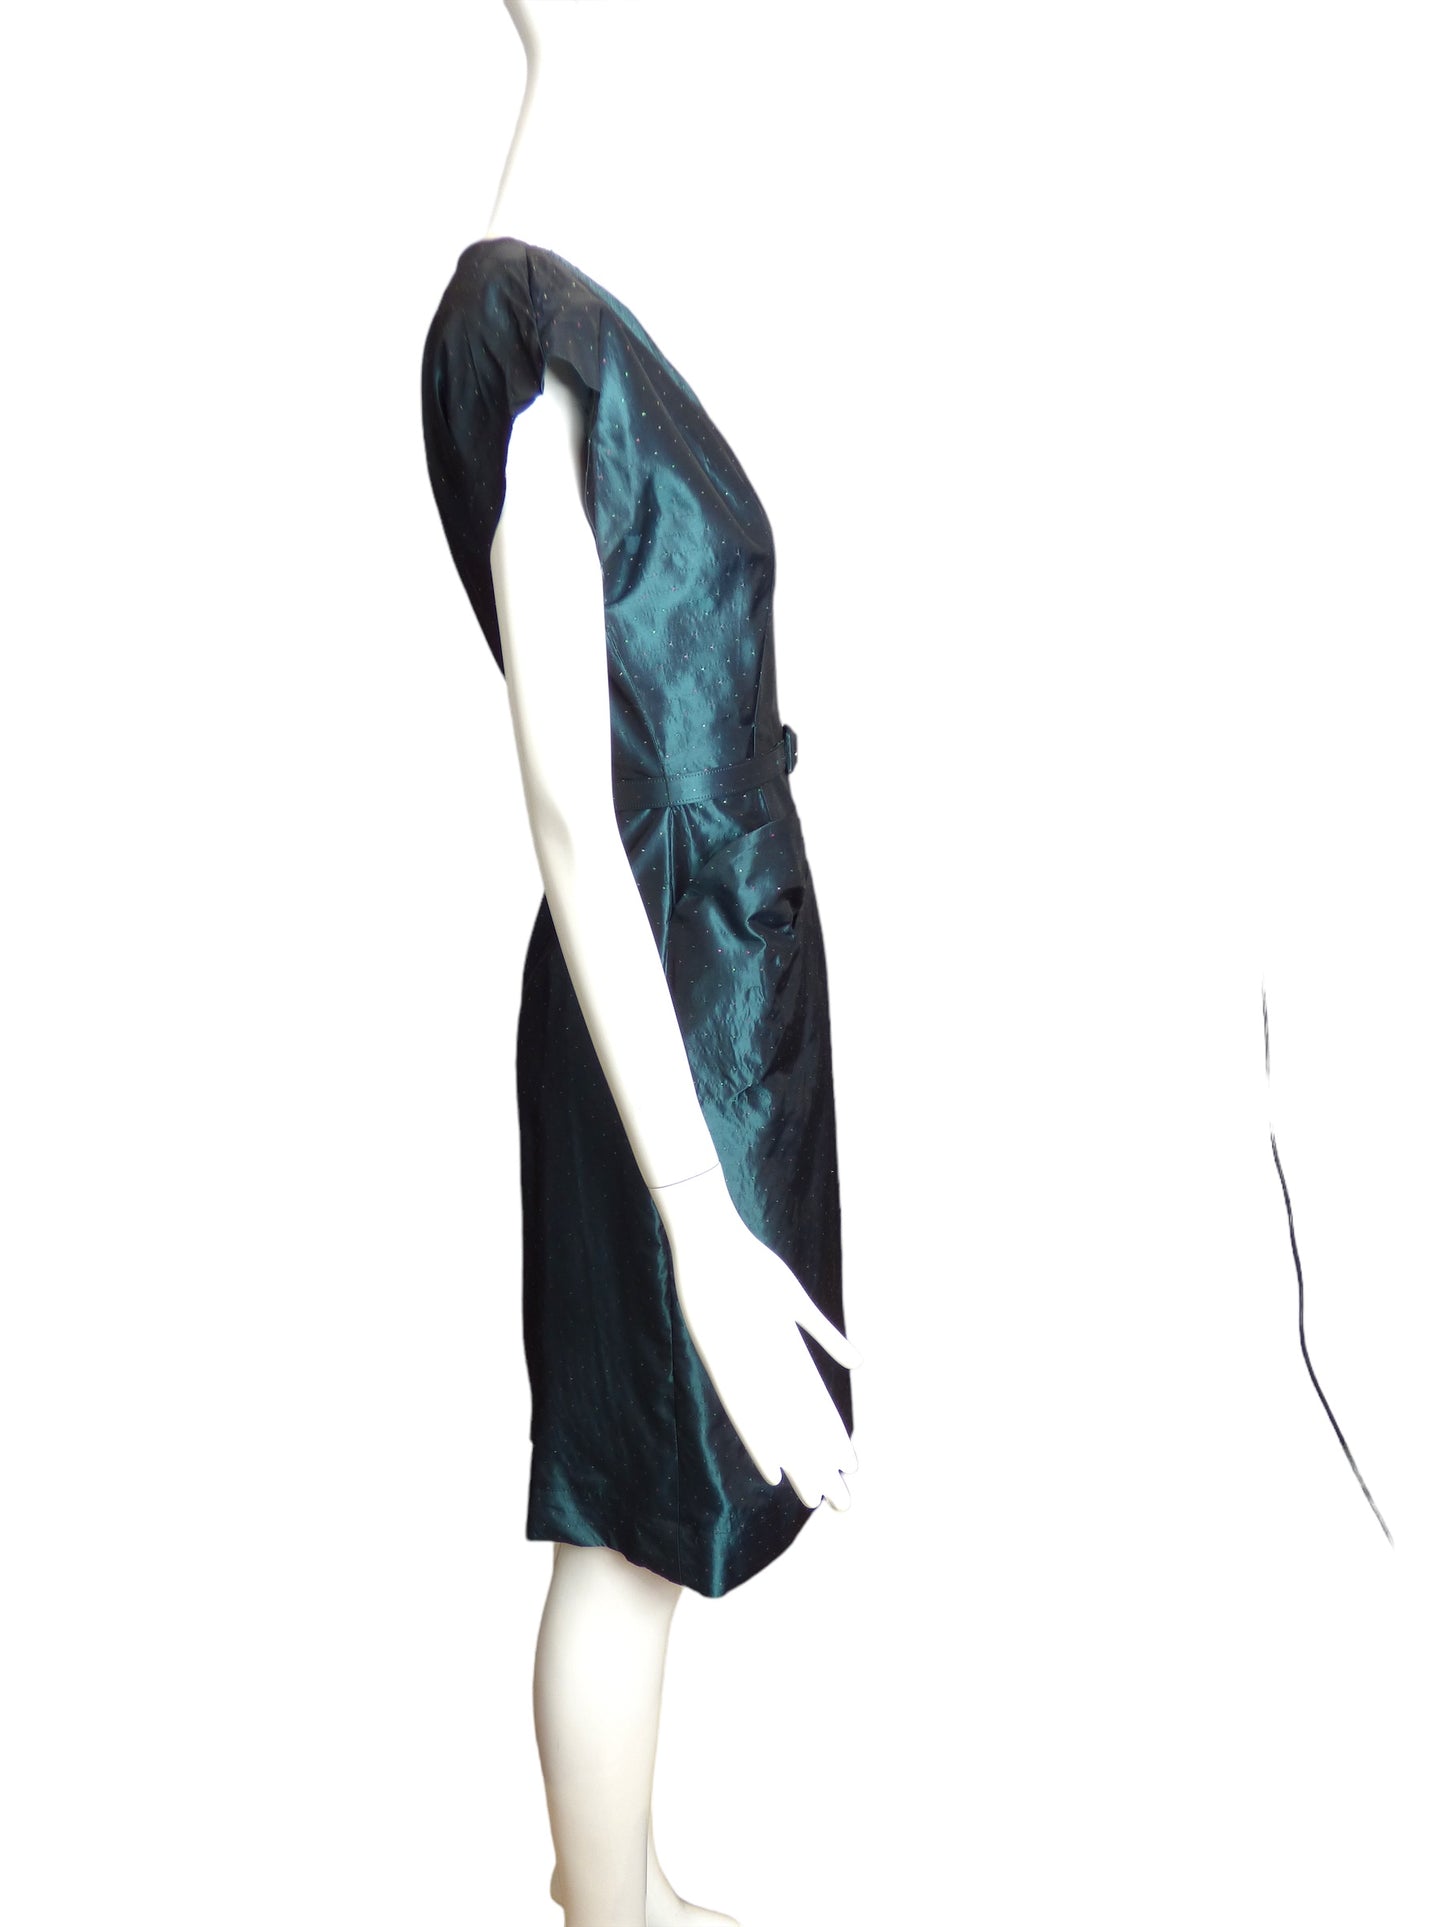 1950s 2pc Teal Taffeta  Dress, Size 2